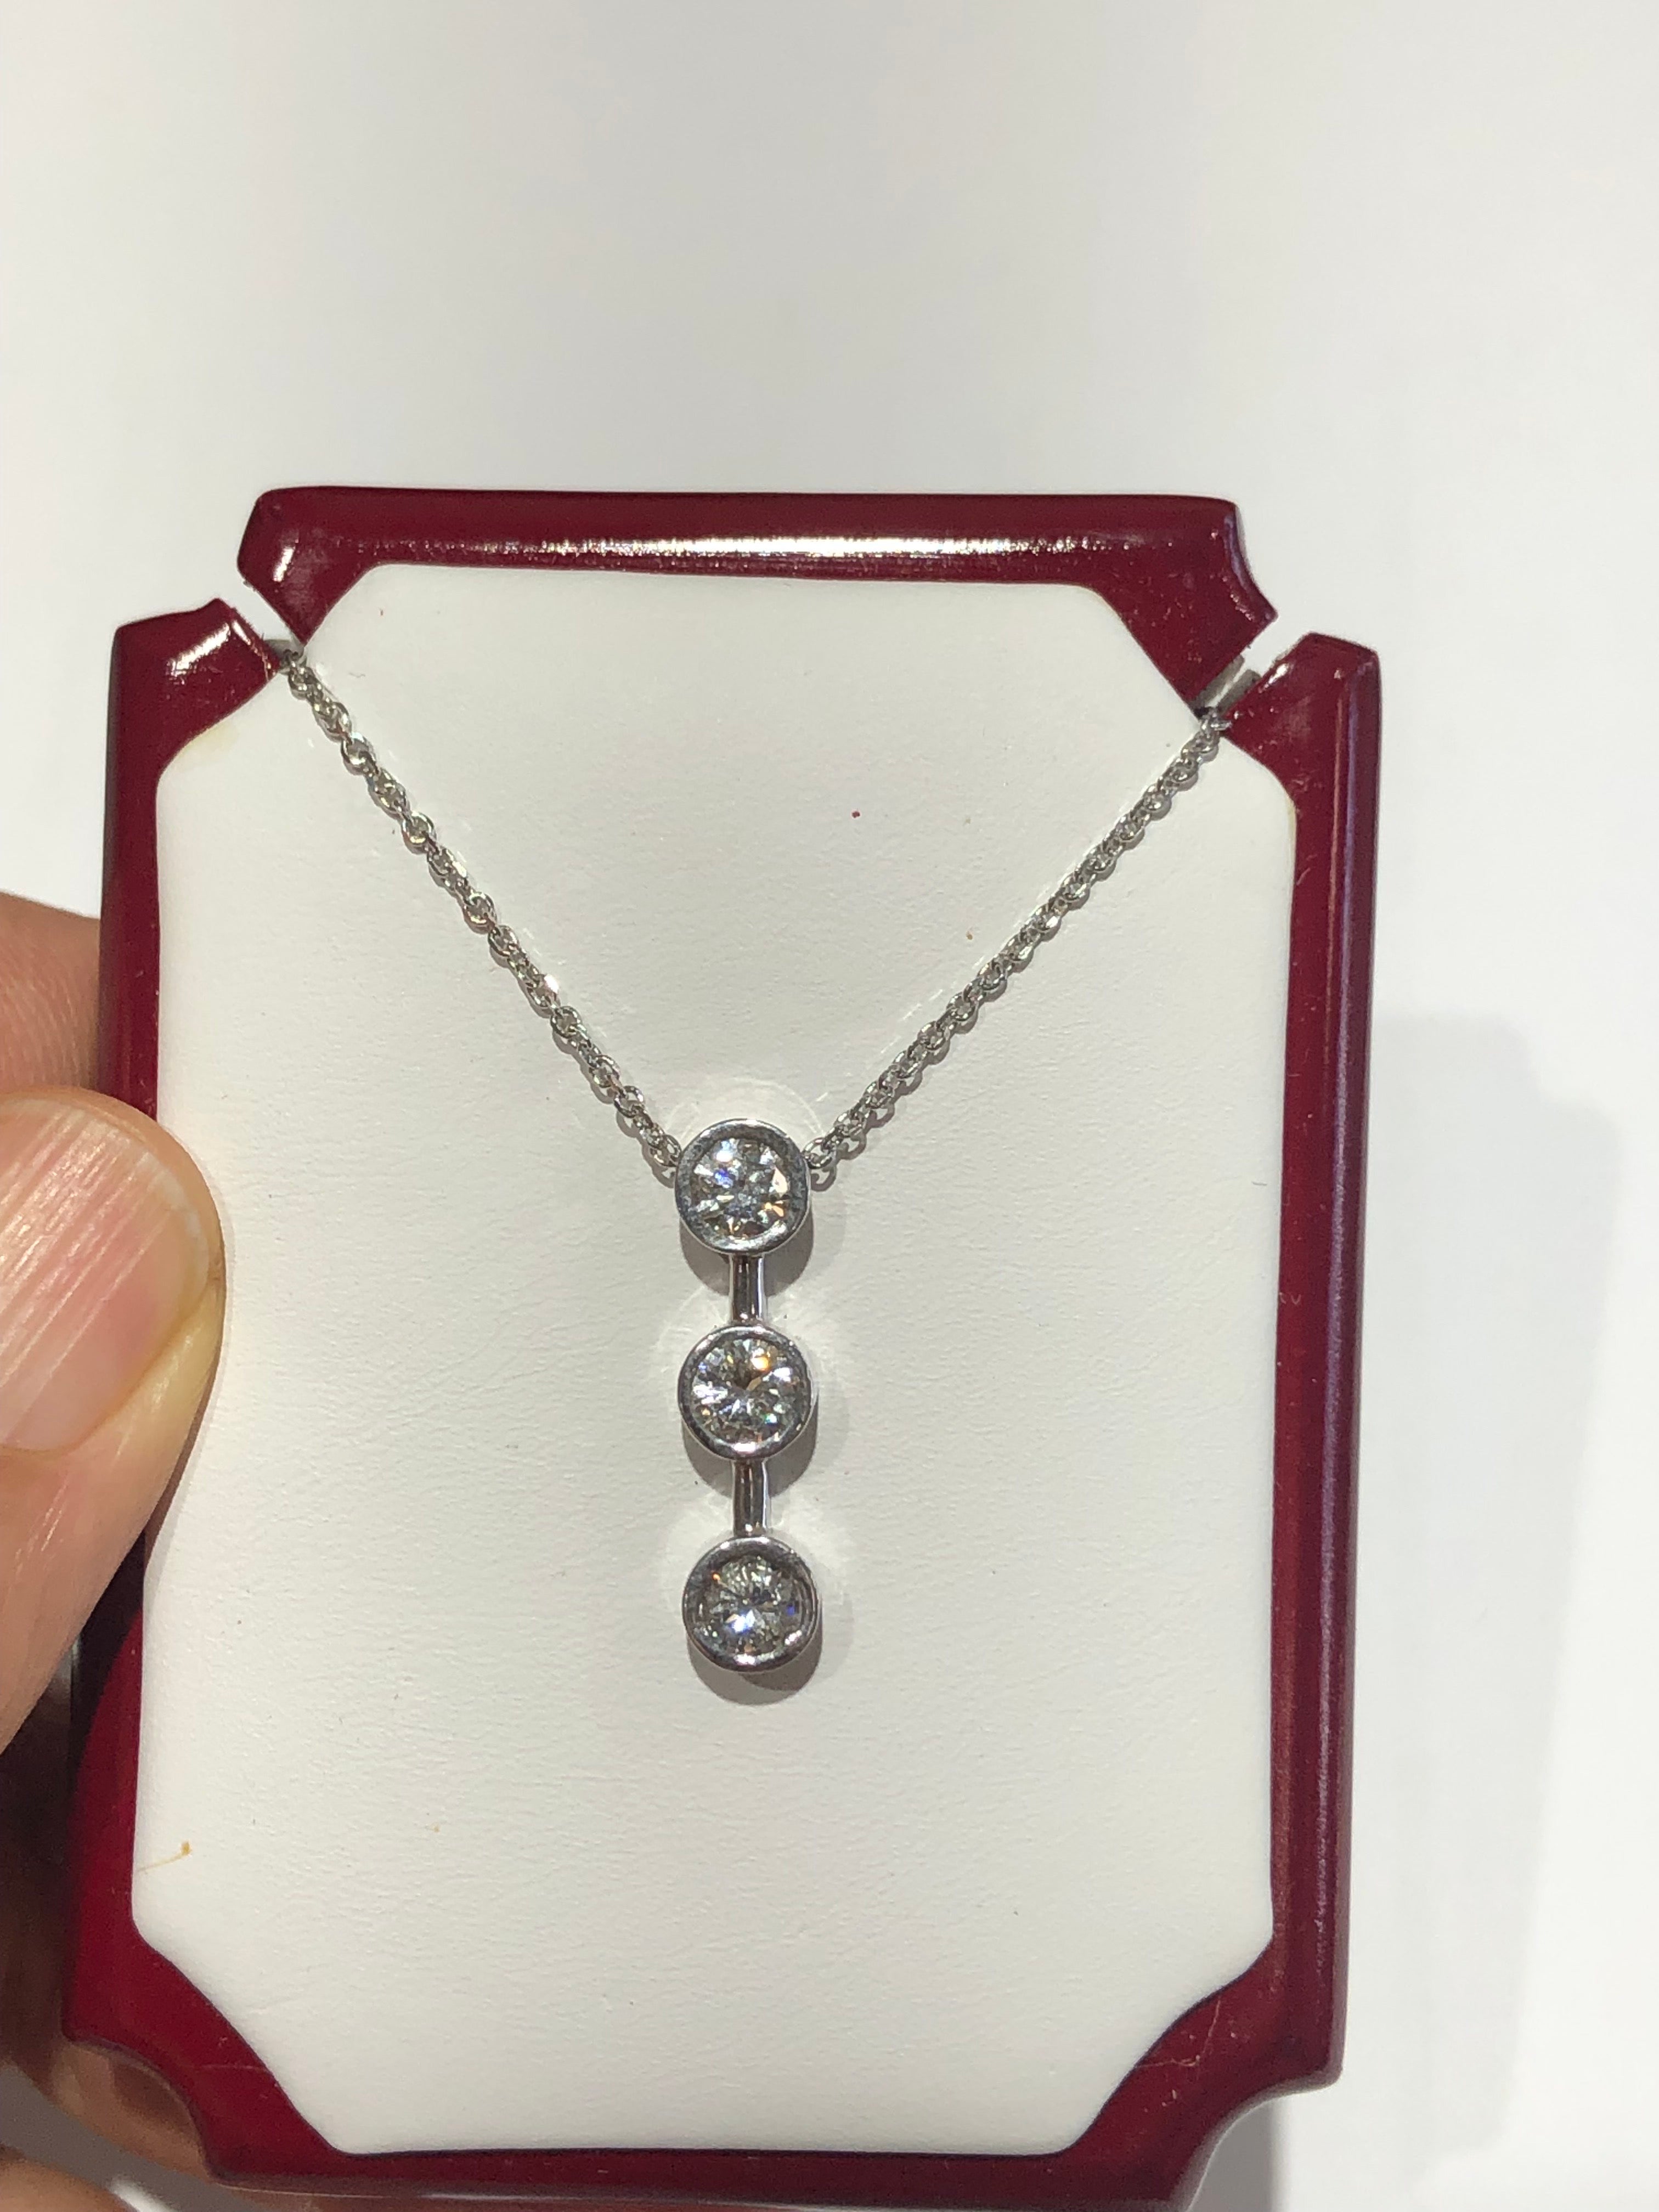 3 diamond necklace designs